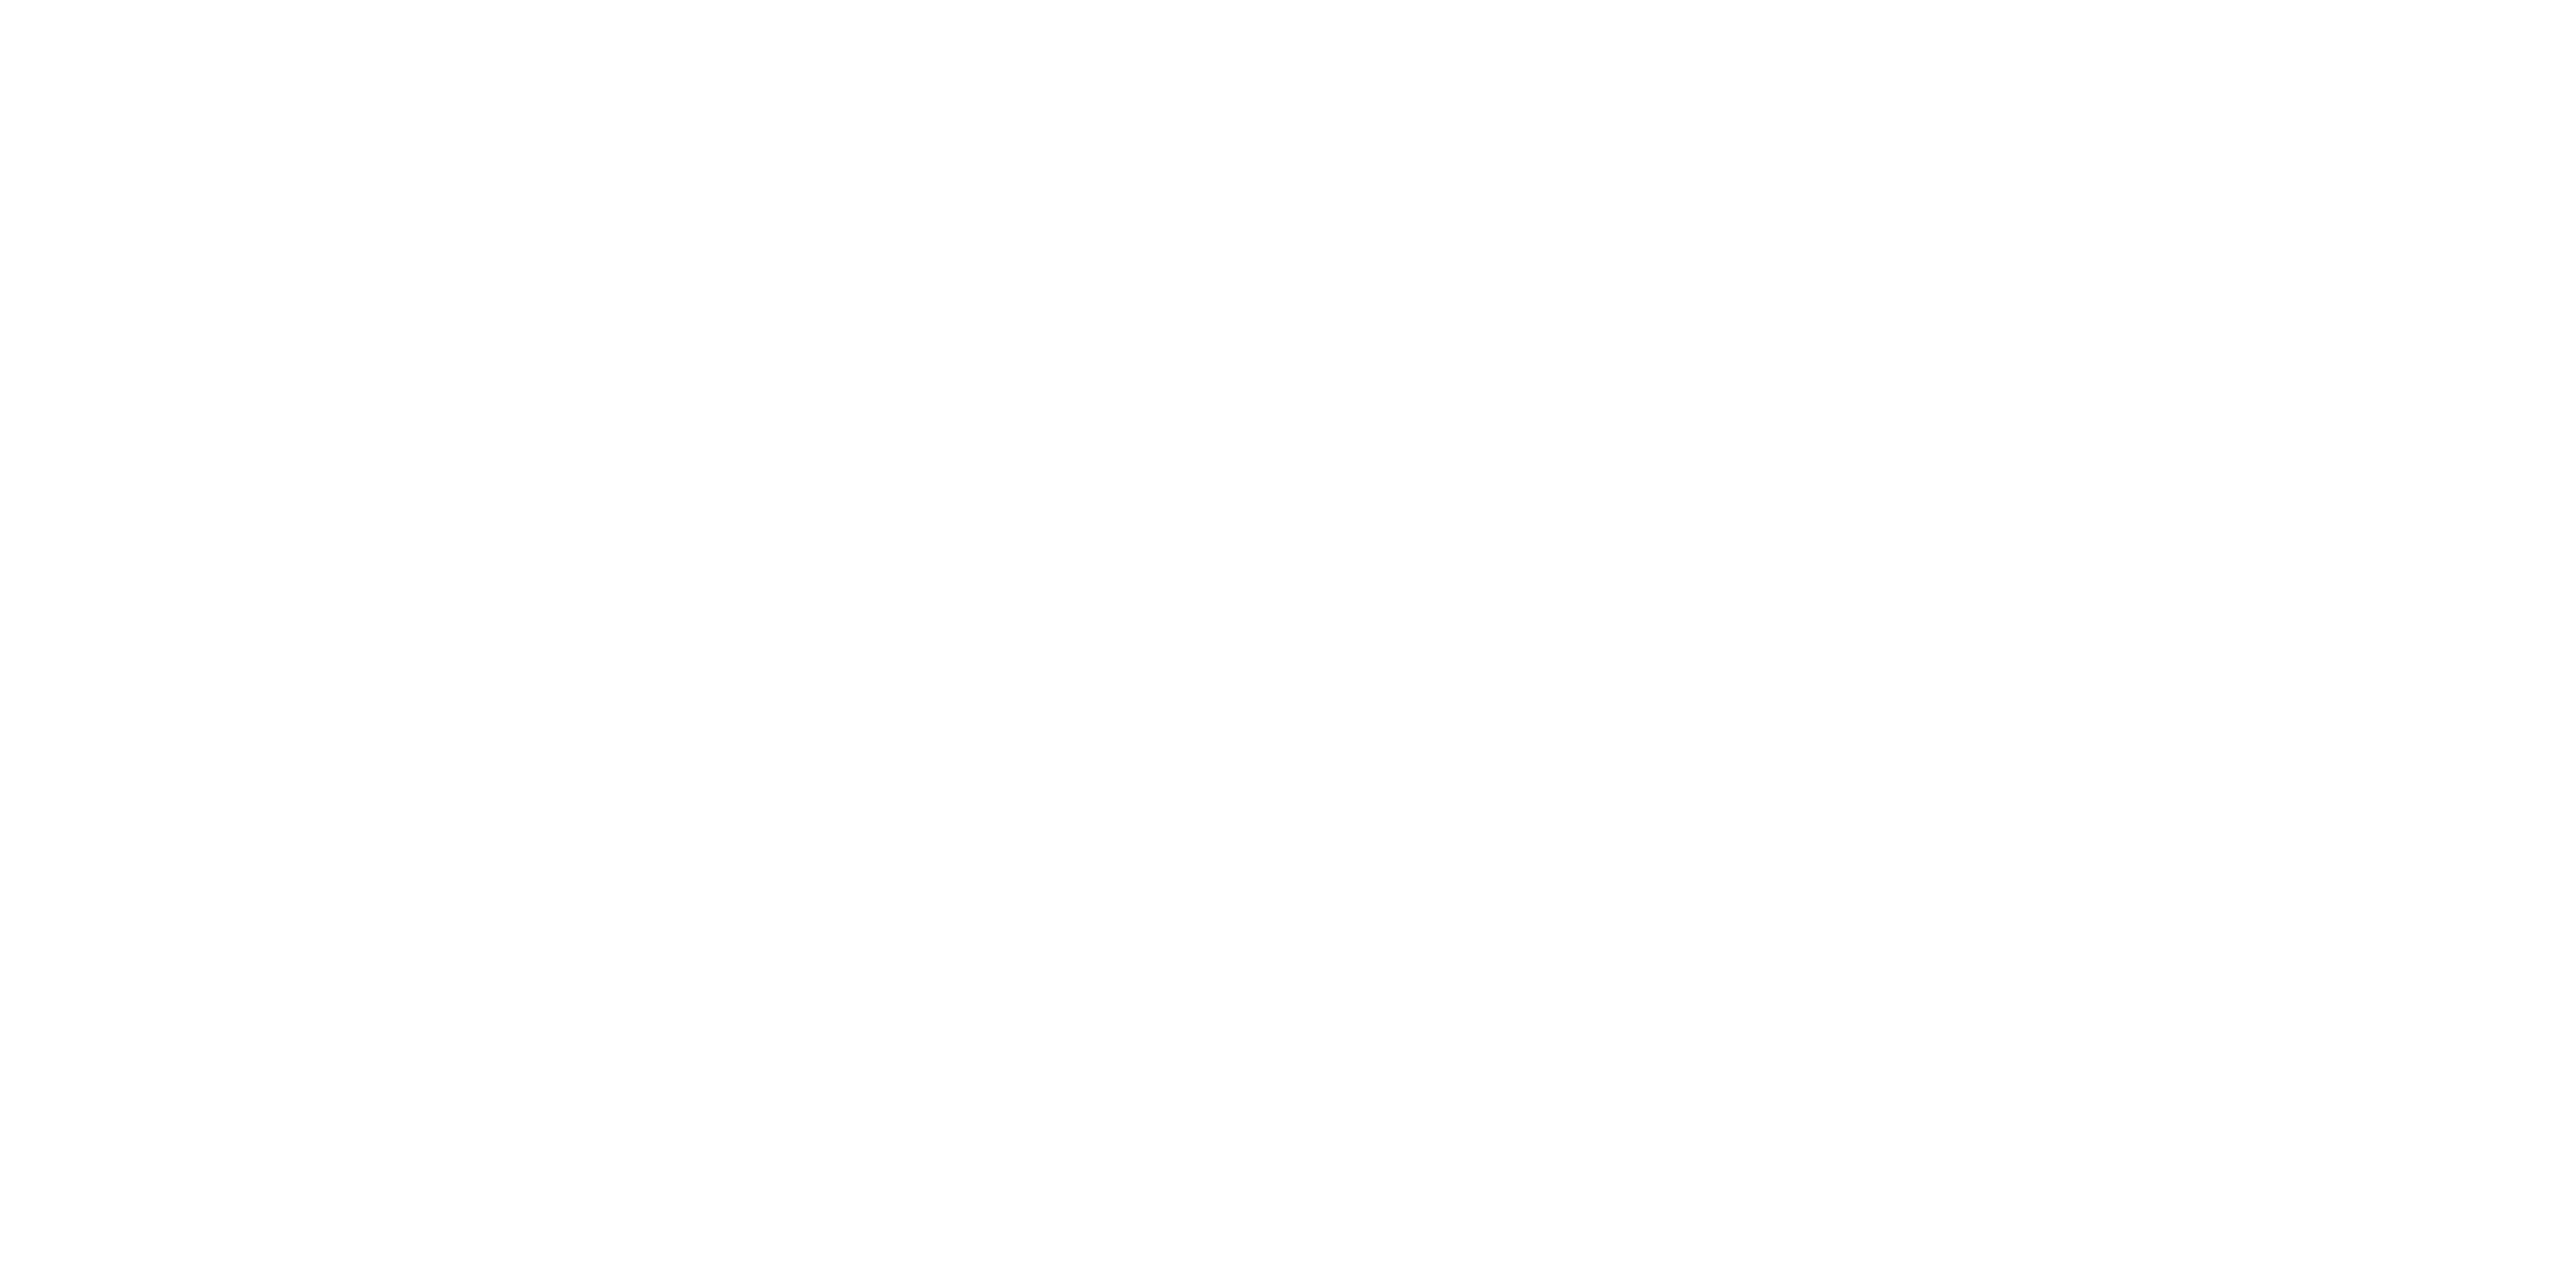 18 & CARAT Logo ALb